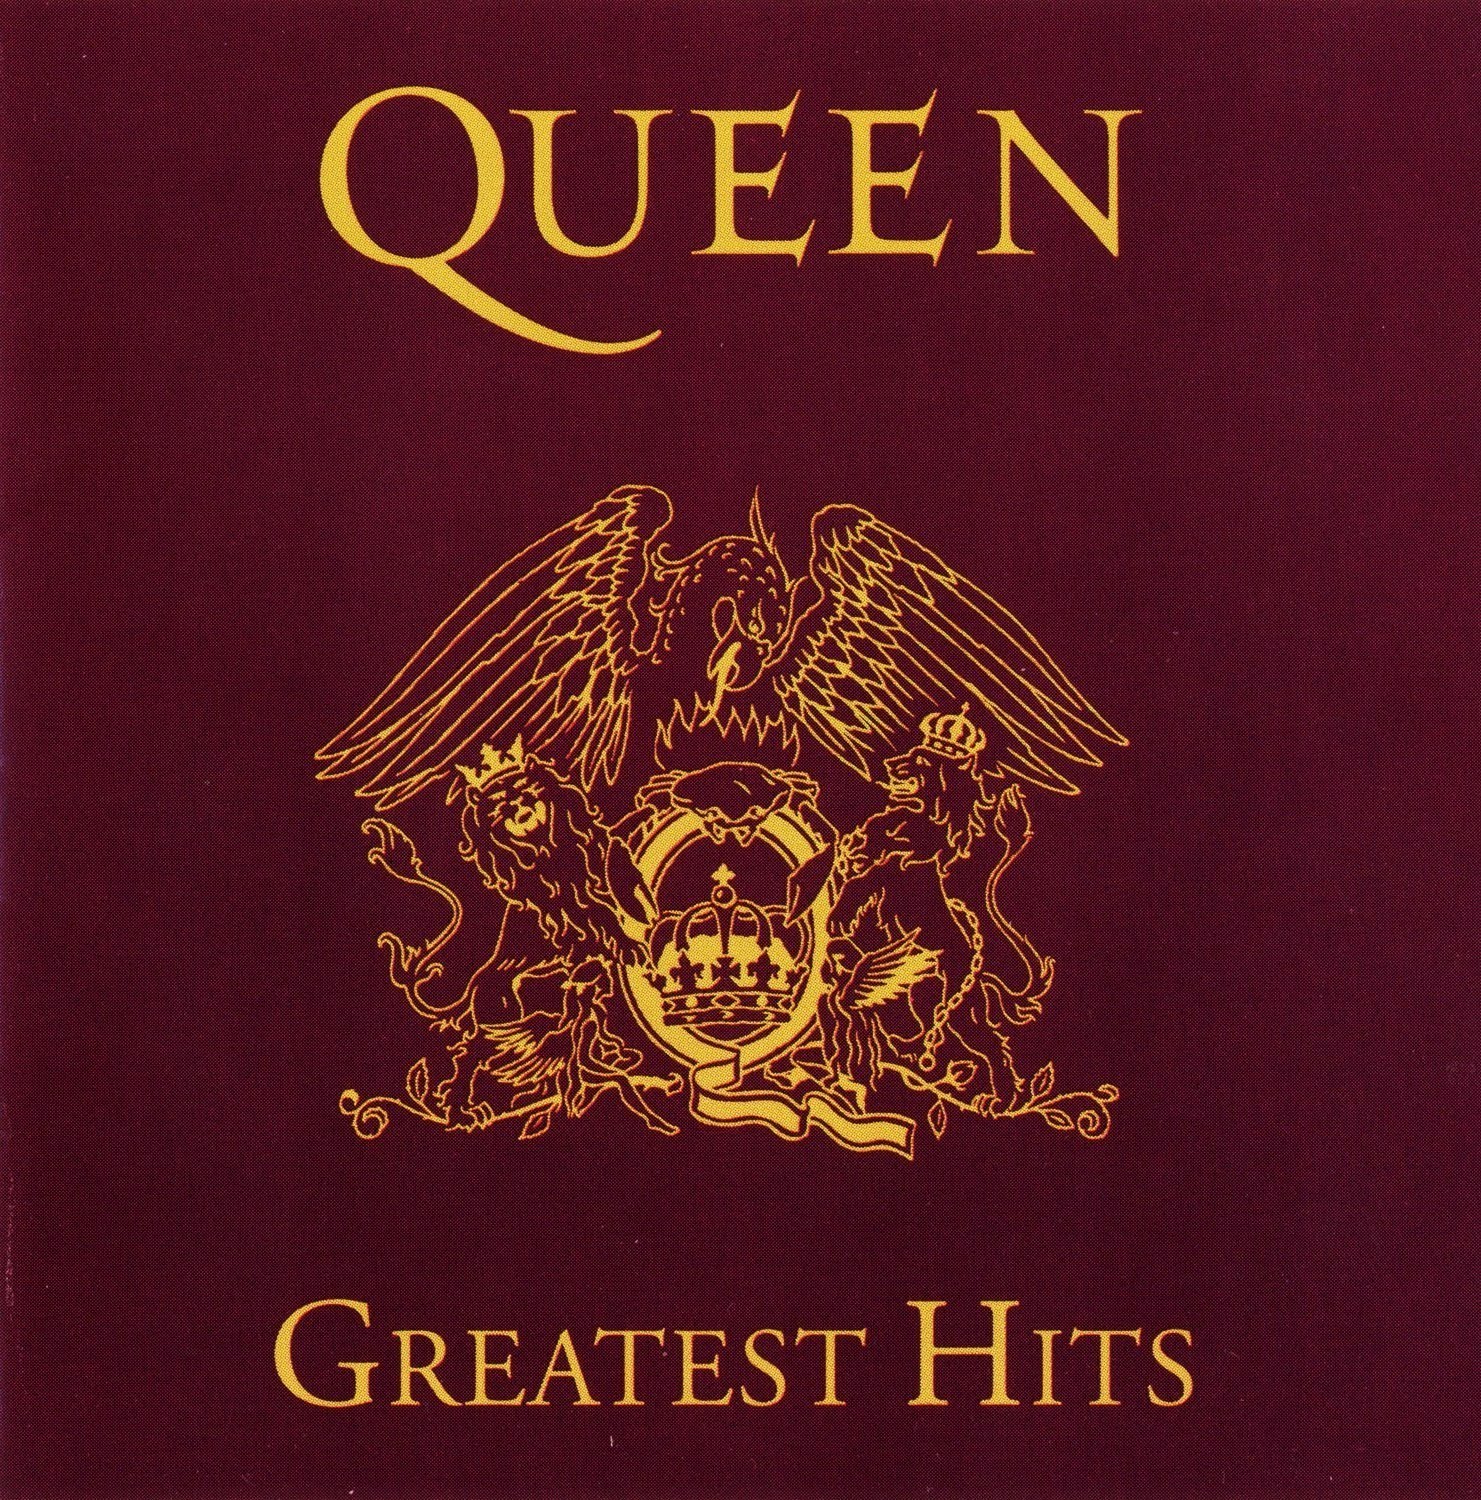 Greatest Hits Queen album - Wikipedia